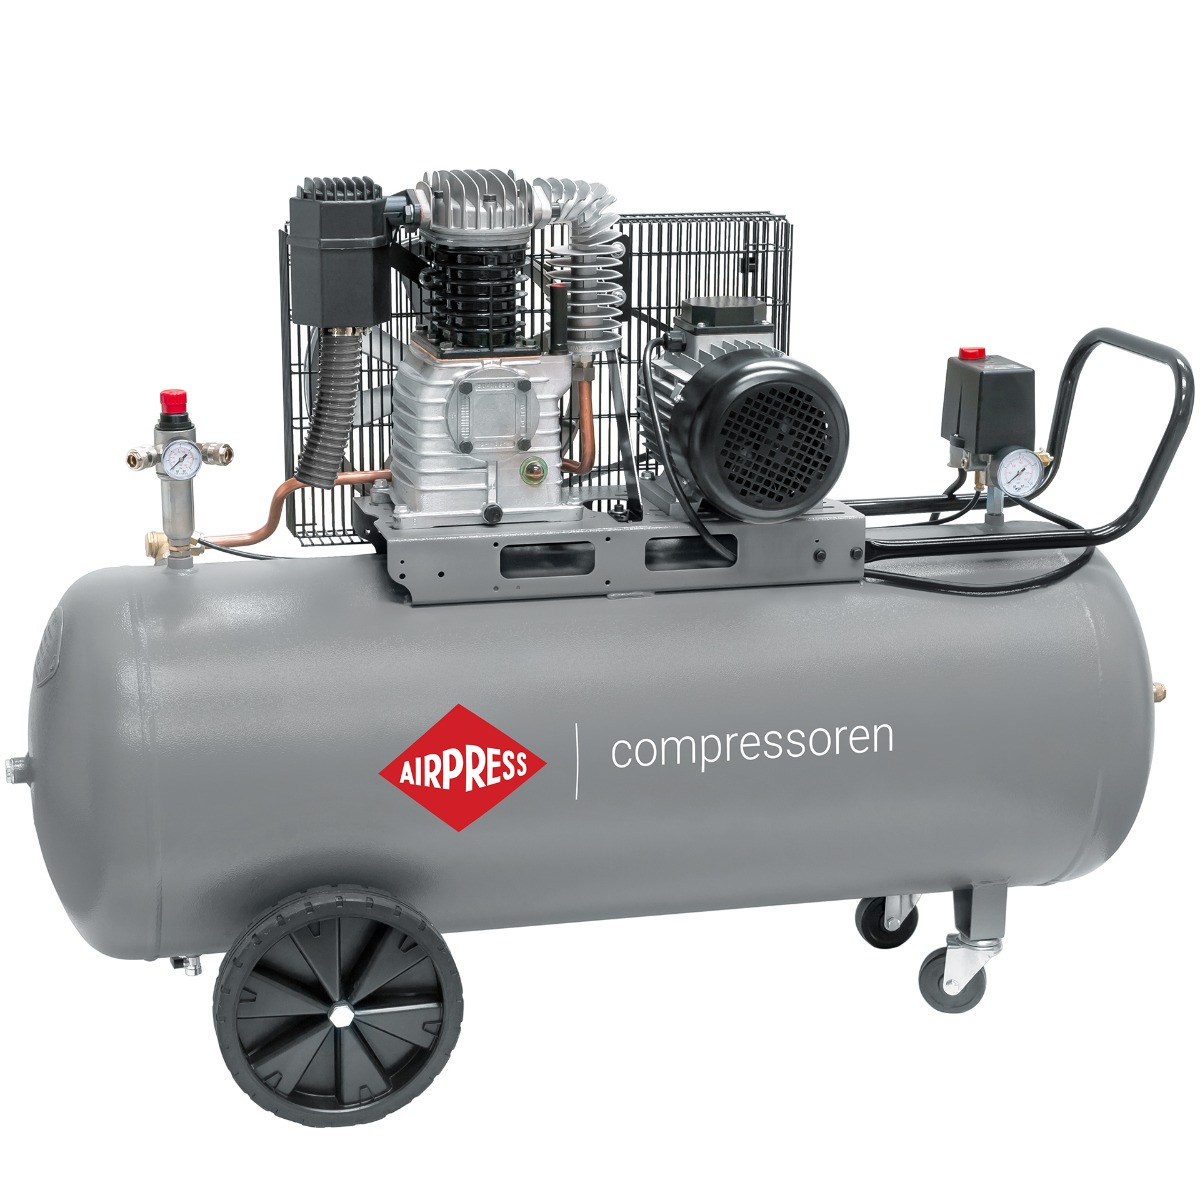 Compresor de aire de una etapa profesional HK 425-150